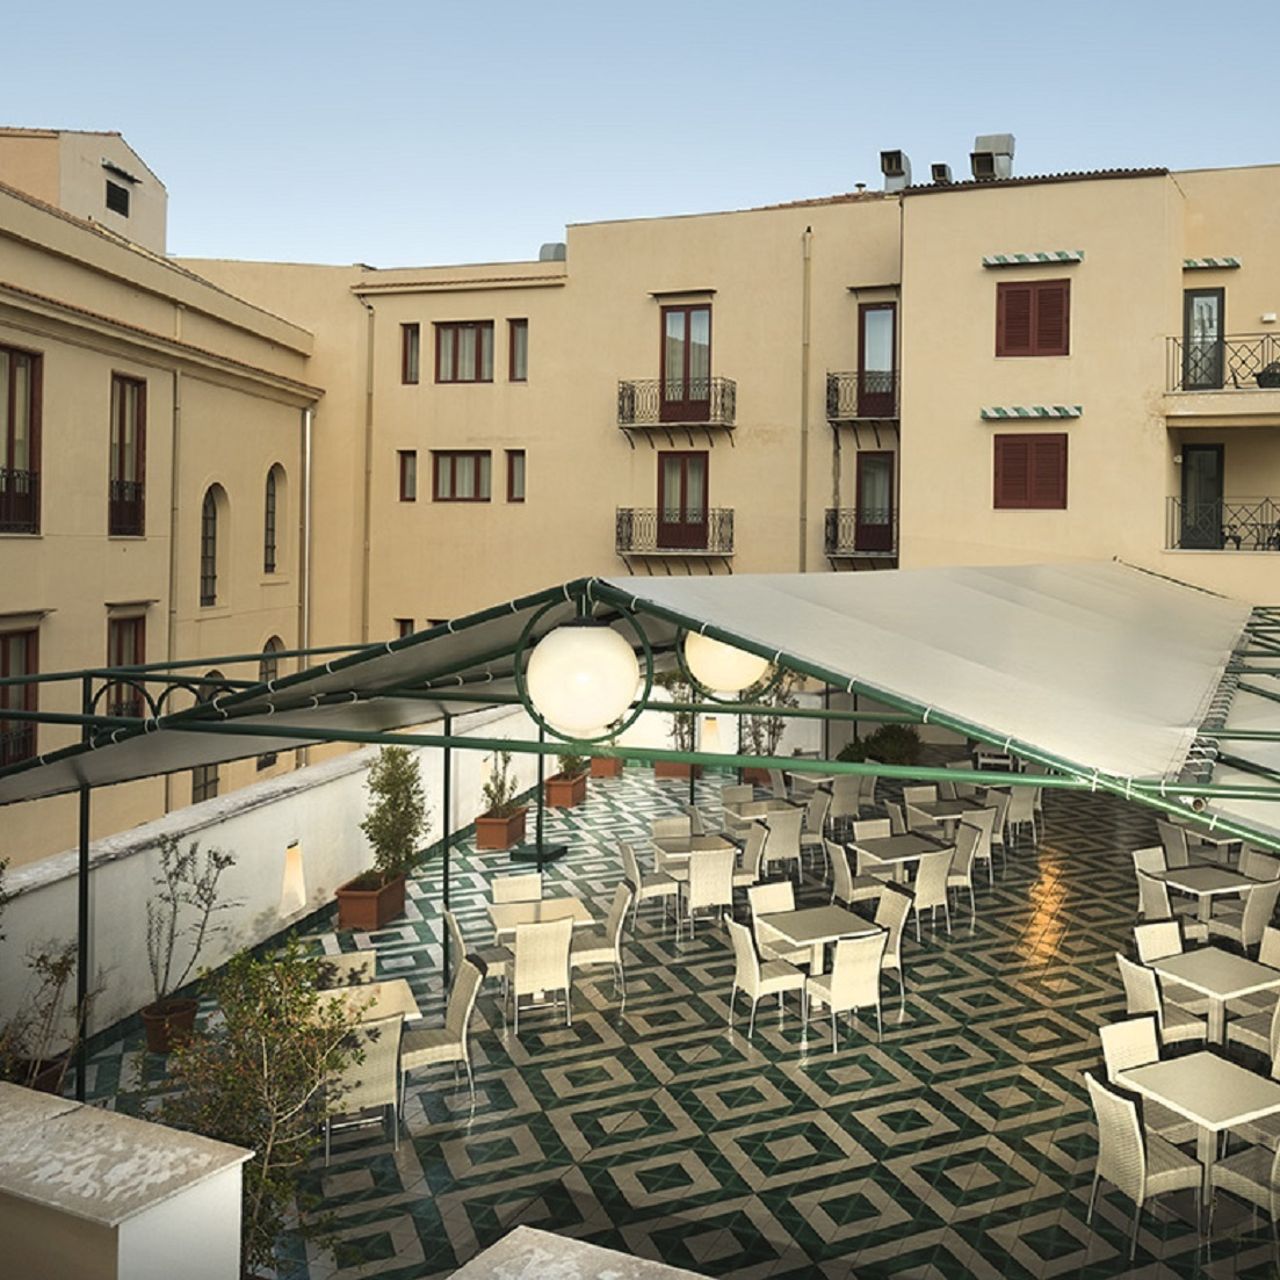 Piazza Borsa Grand Hotel - Palermo - Great prices at HOTEL INFO